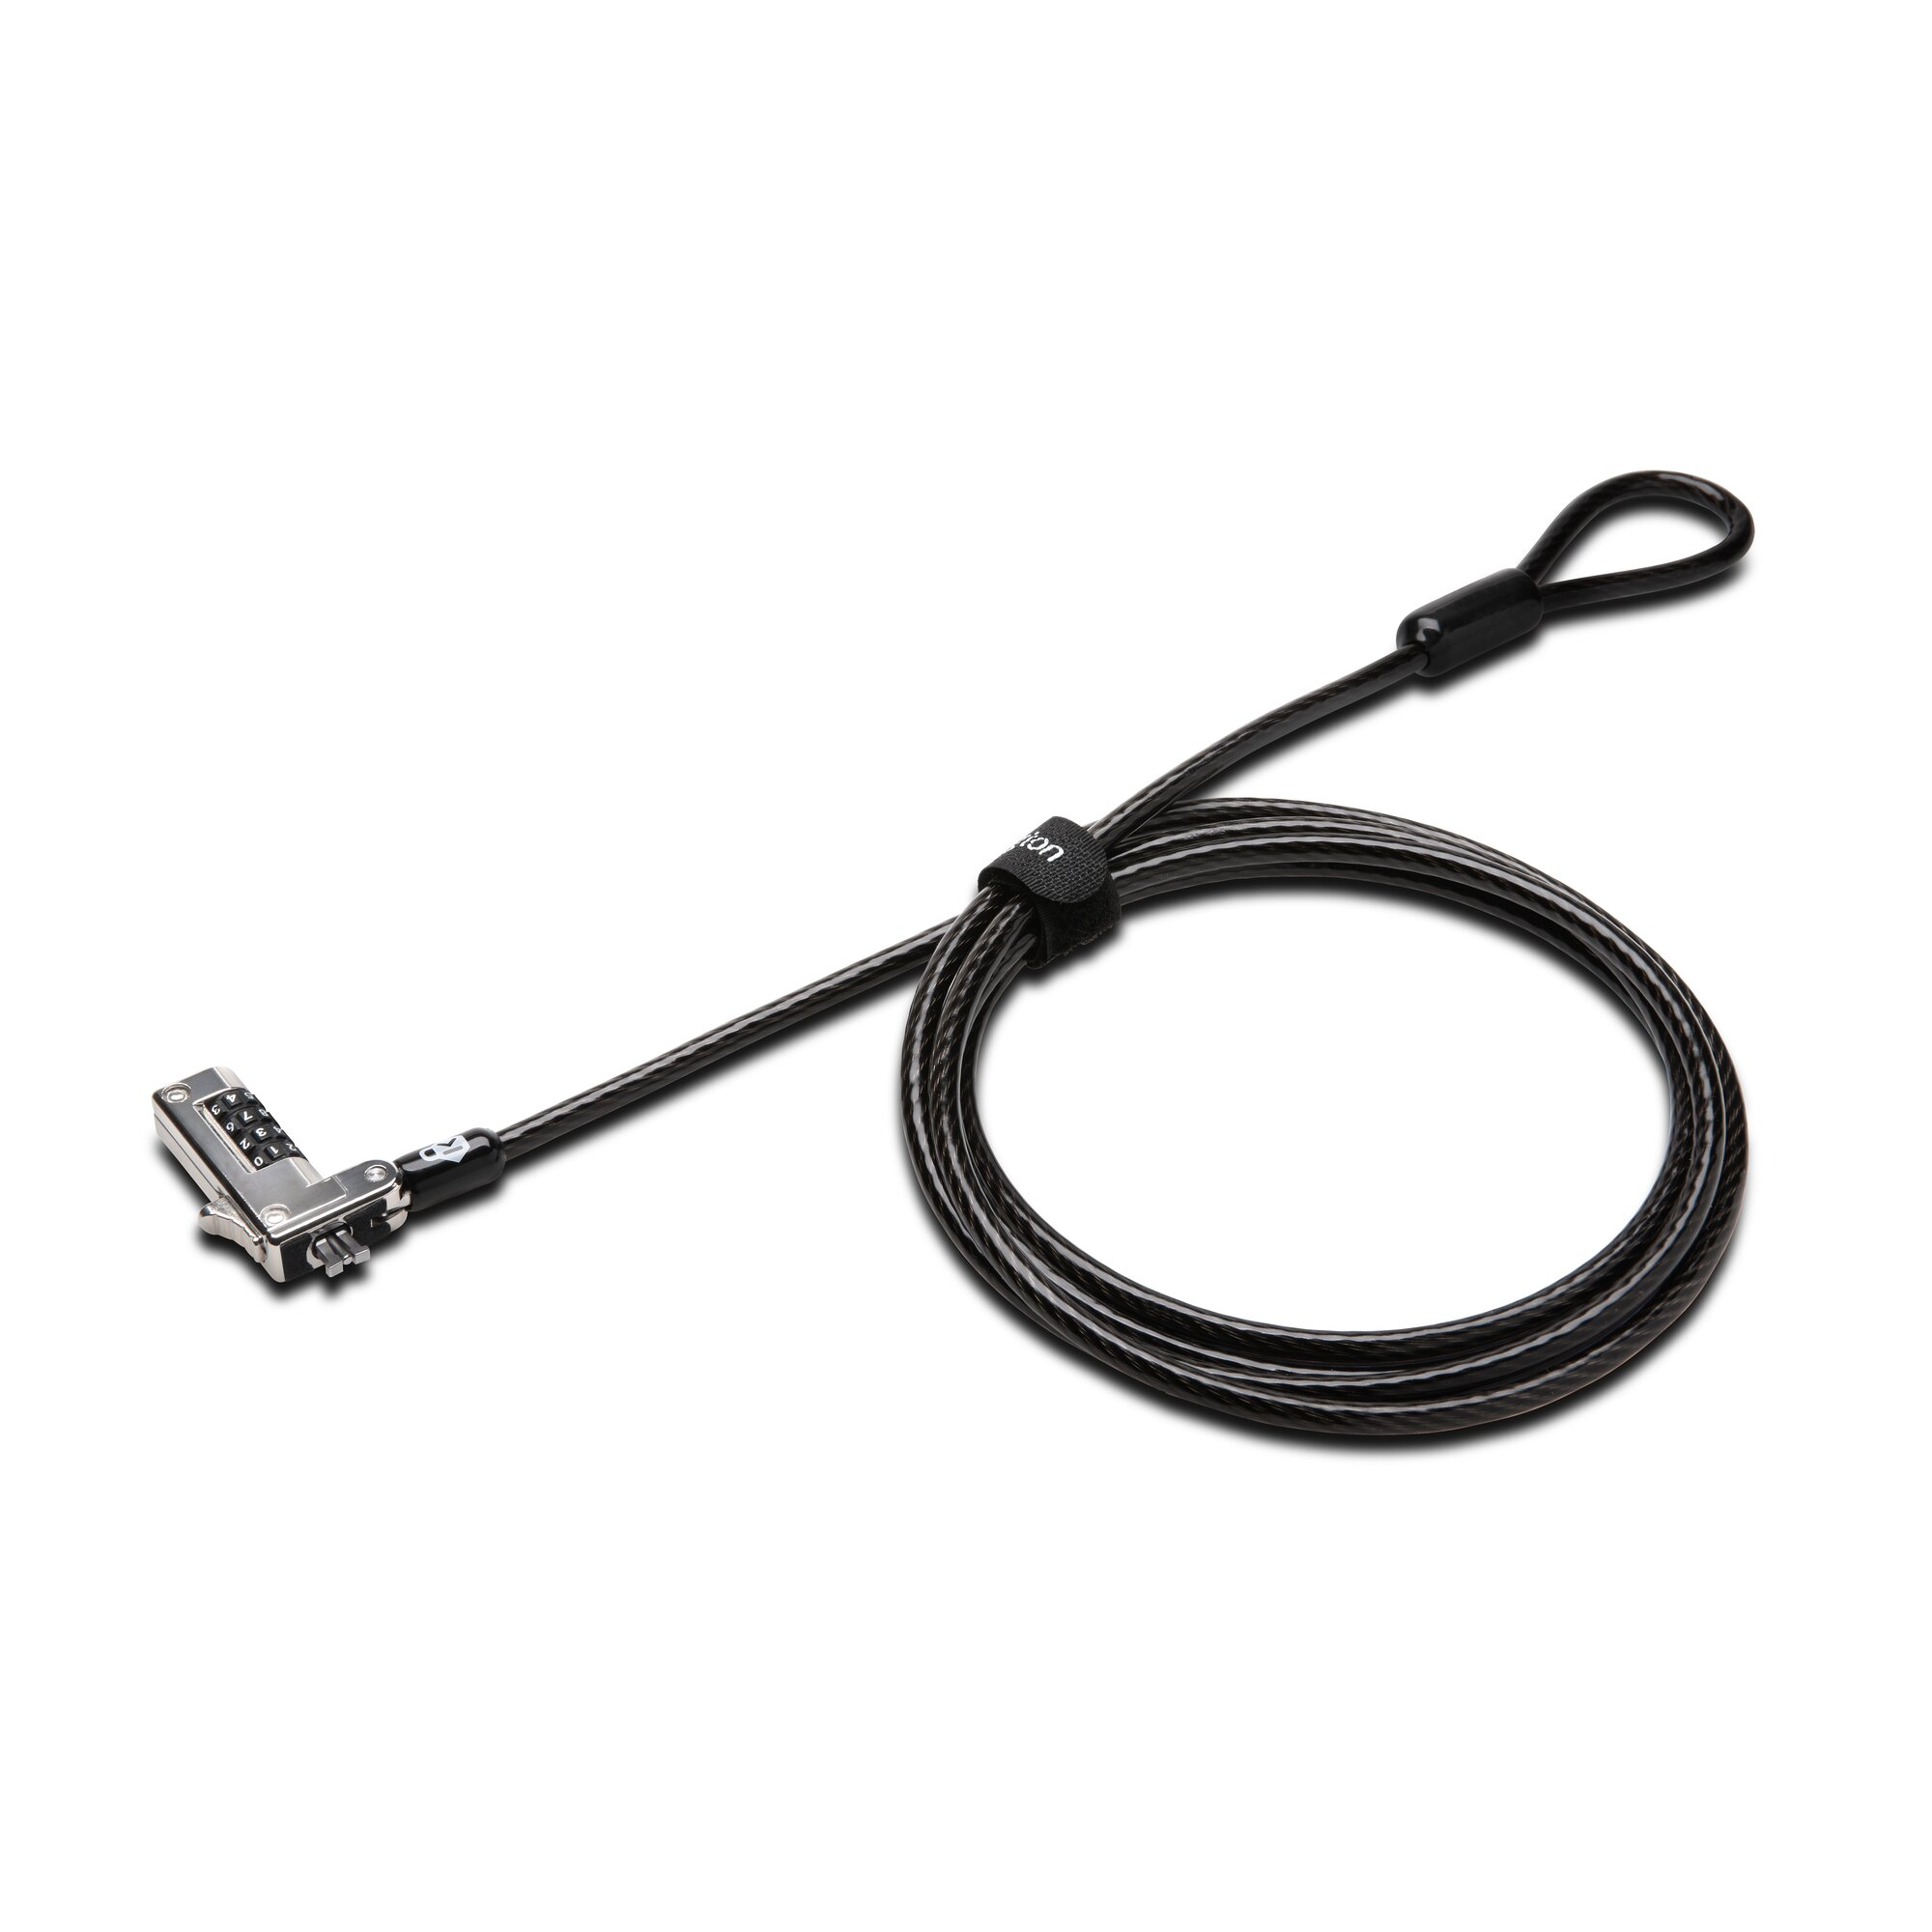 Photos - Cable (video, audio, USB) Kensington Slim Resettable NanoSaver Combination Laptop Lock K60603WW 